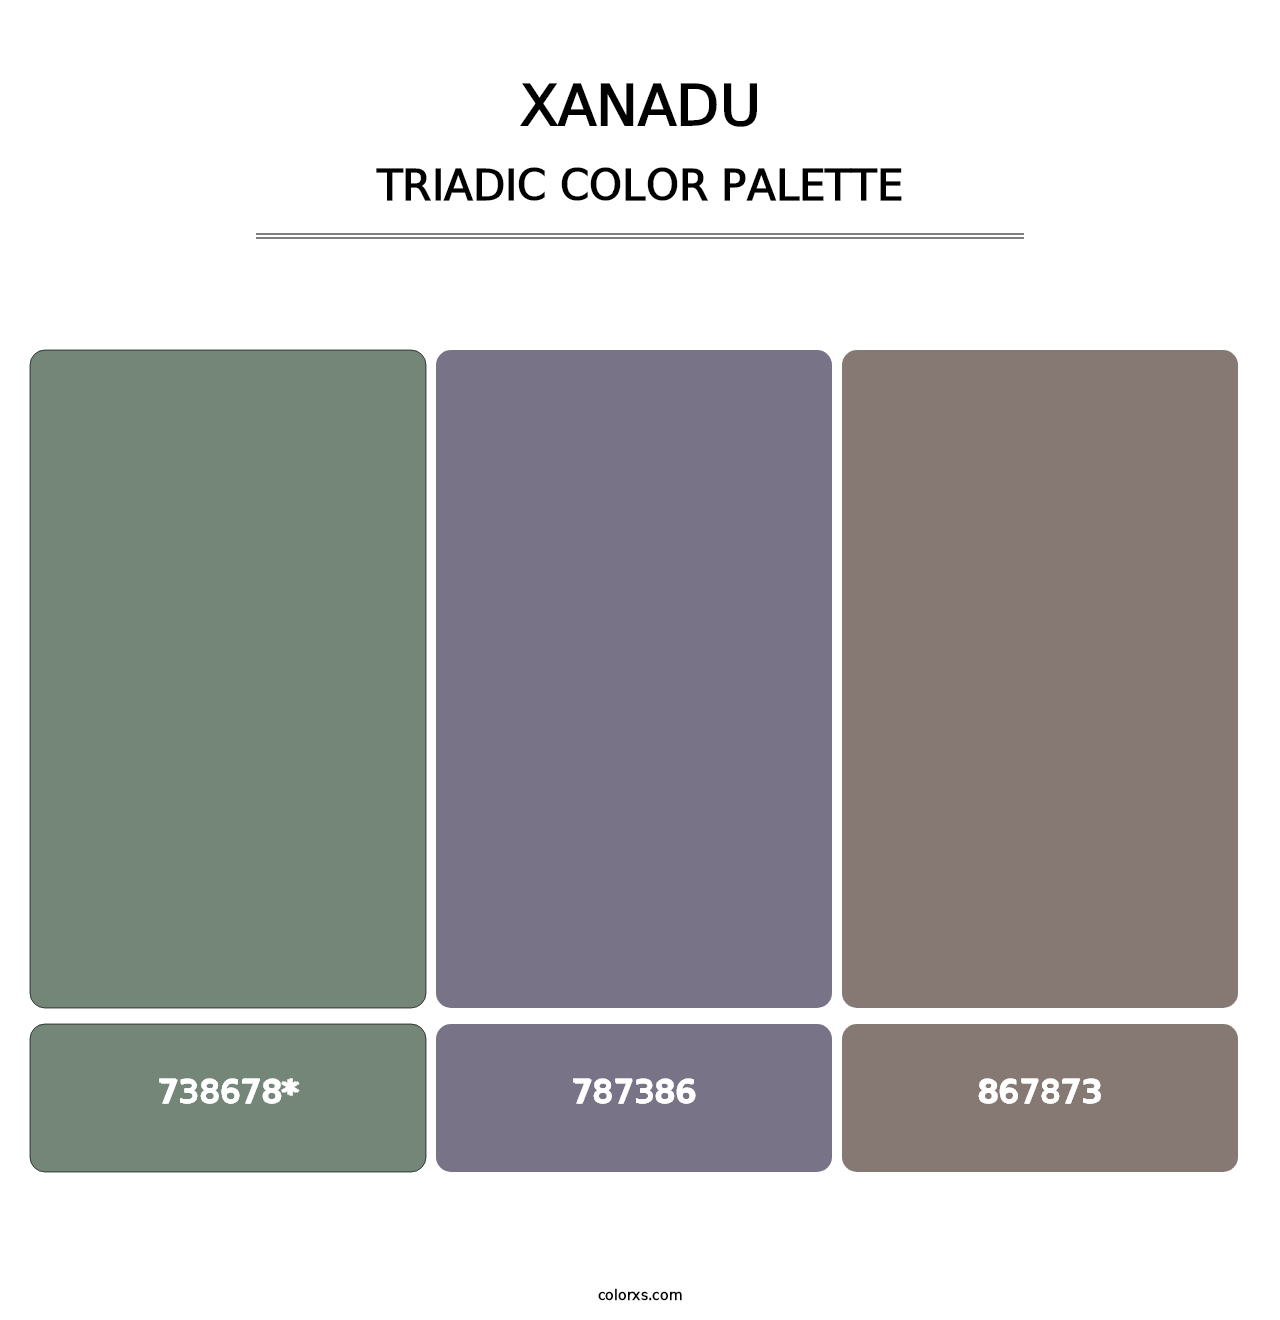 Xanadu - Triadic Color Palette